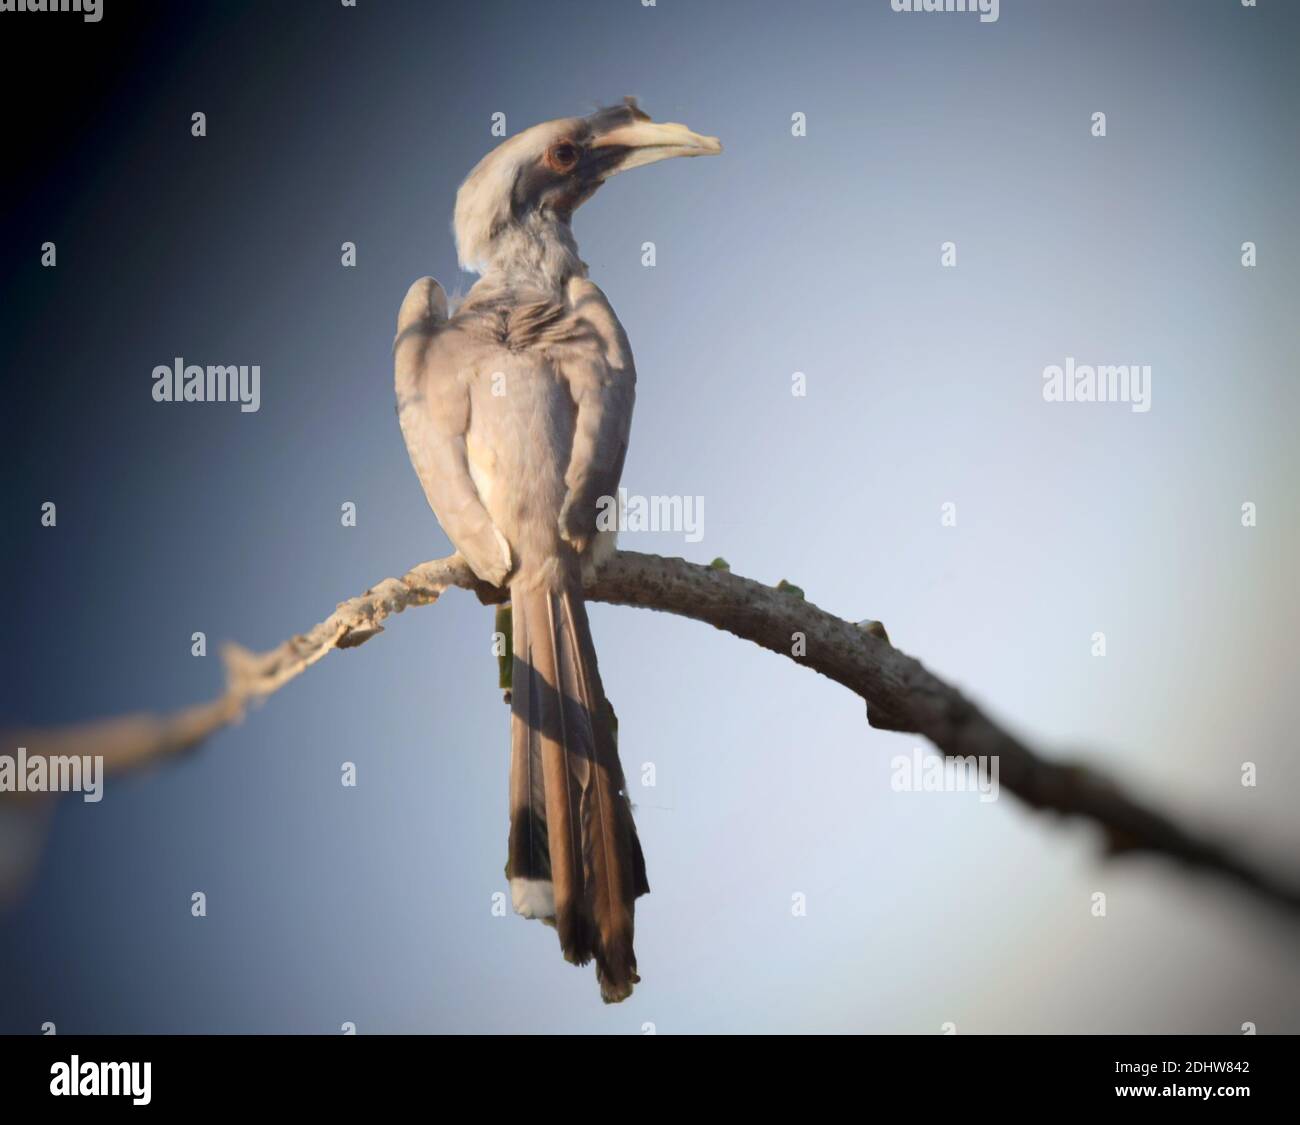 Birds of maharashtra hi-res stock photography and images - Alamy